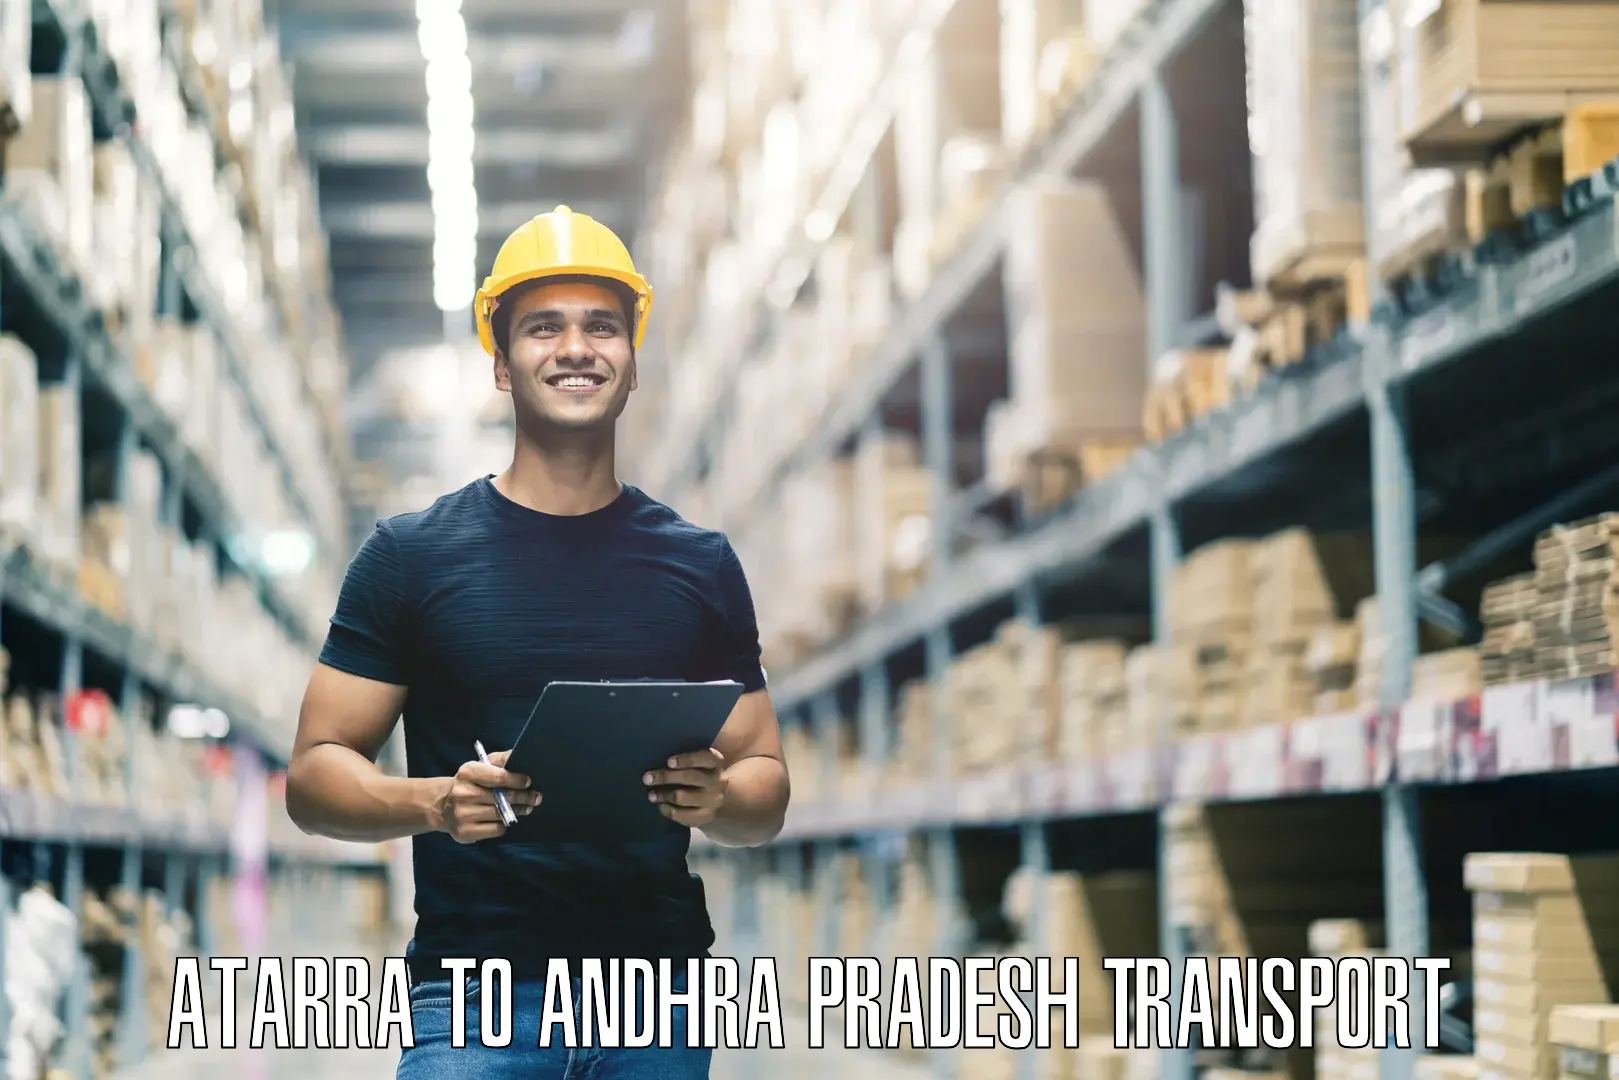 Express transport services Atarra to Andhra Pradesh